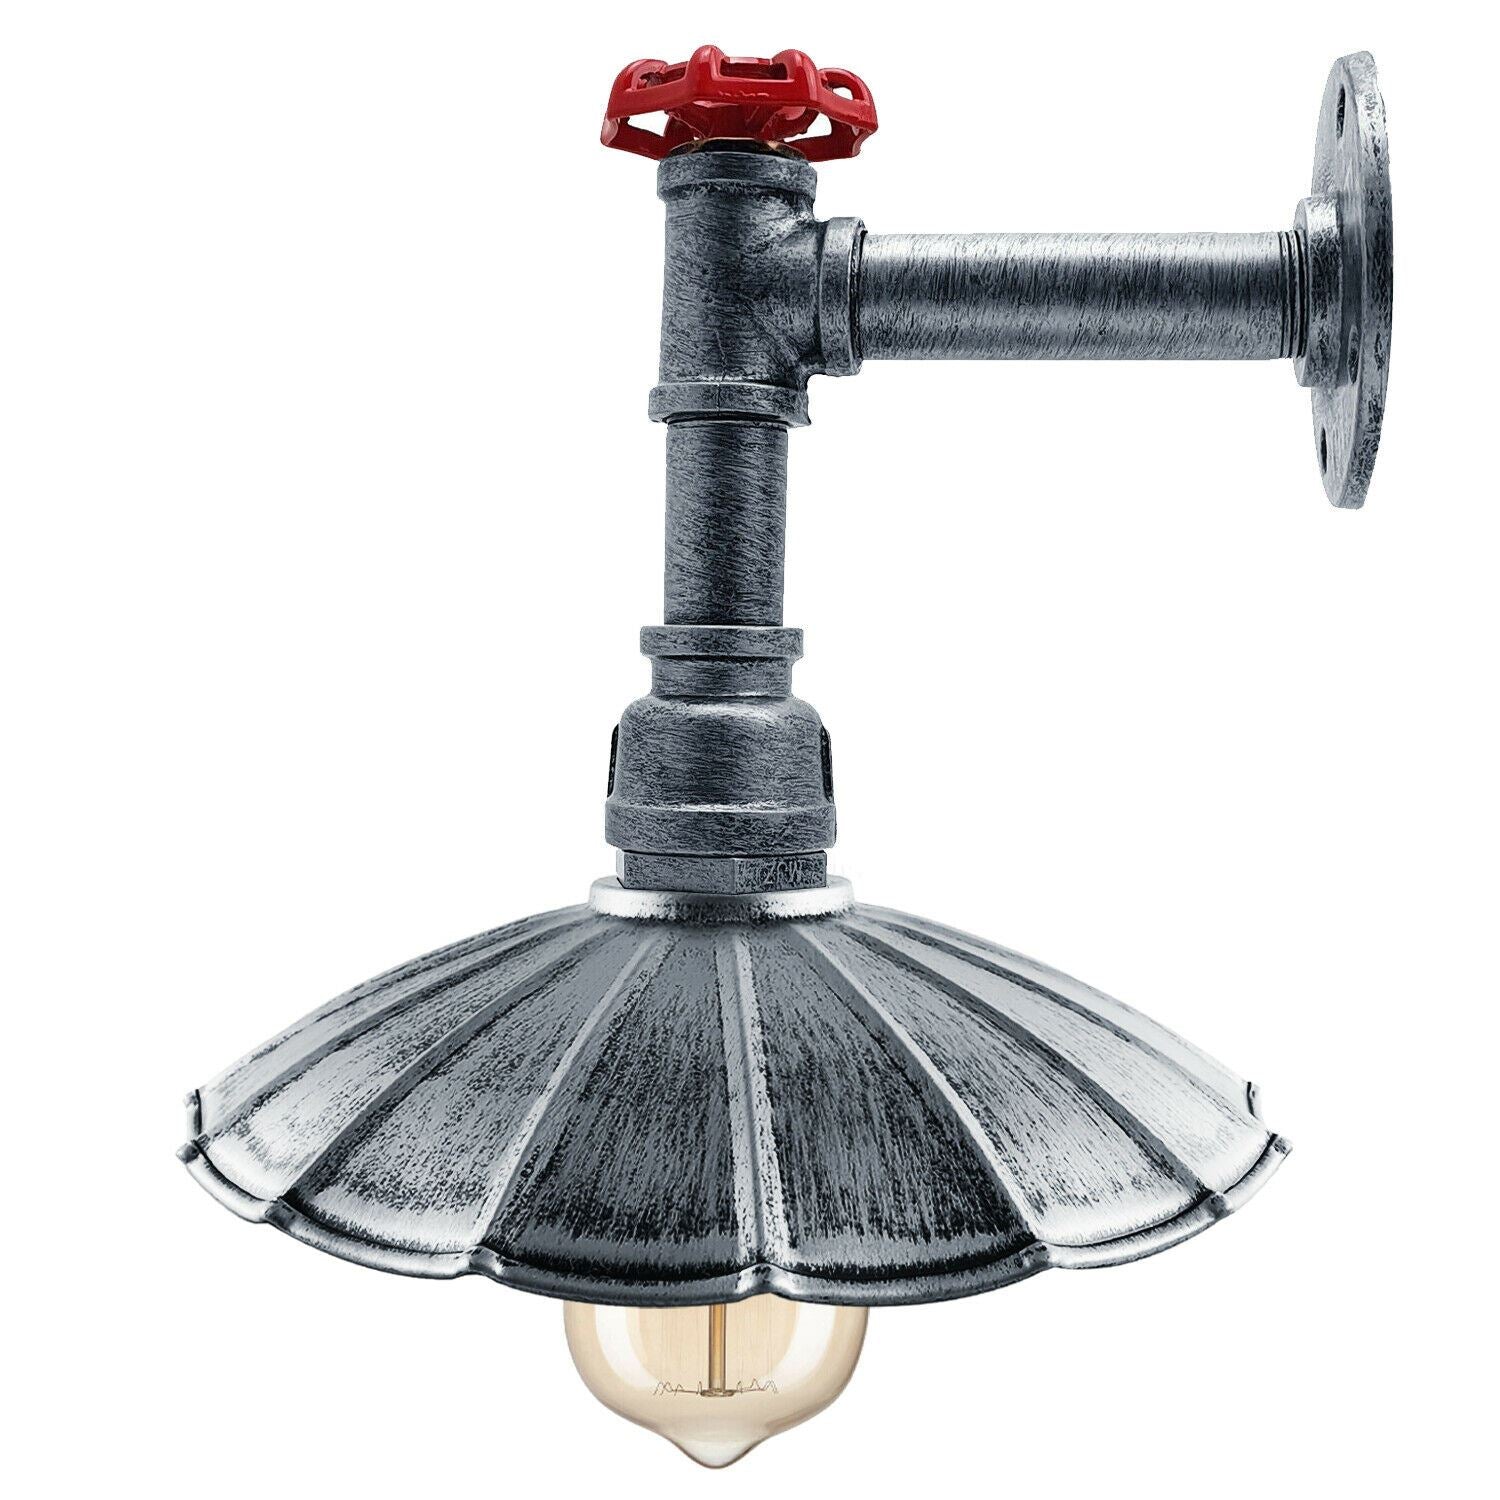 Vintage Retro Industrial Wall Pipe Light Fittings Indoor Sconce Metal Lamp Umbrella Shape Shade for Basement, Bedroom, Home Office, Study room~1250 - LEDSone UK Ltd